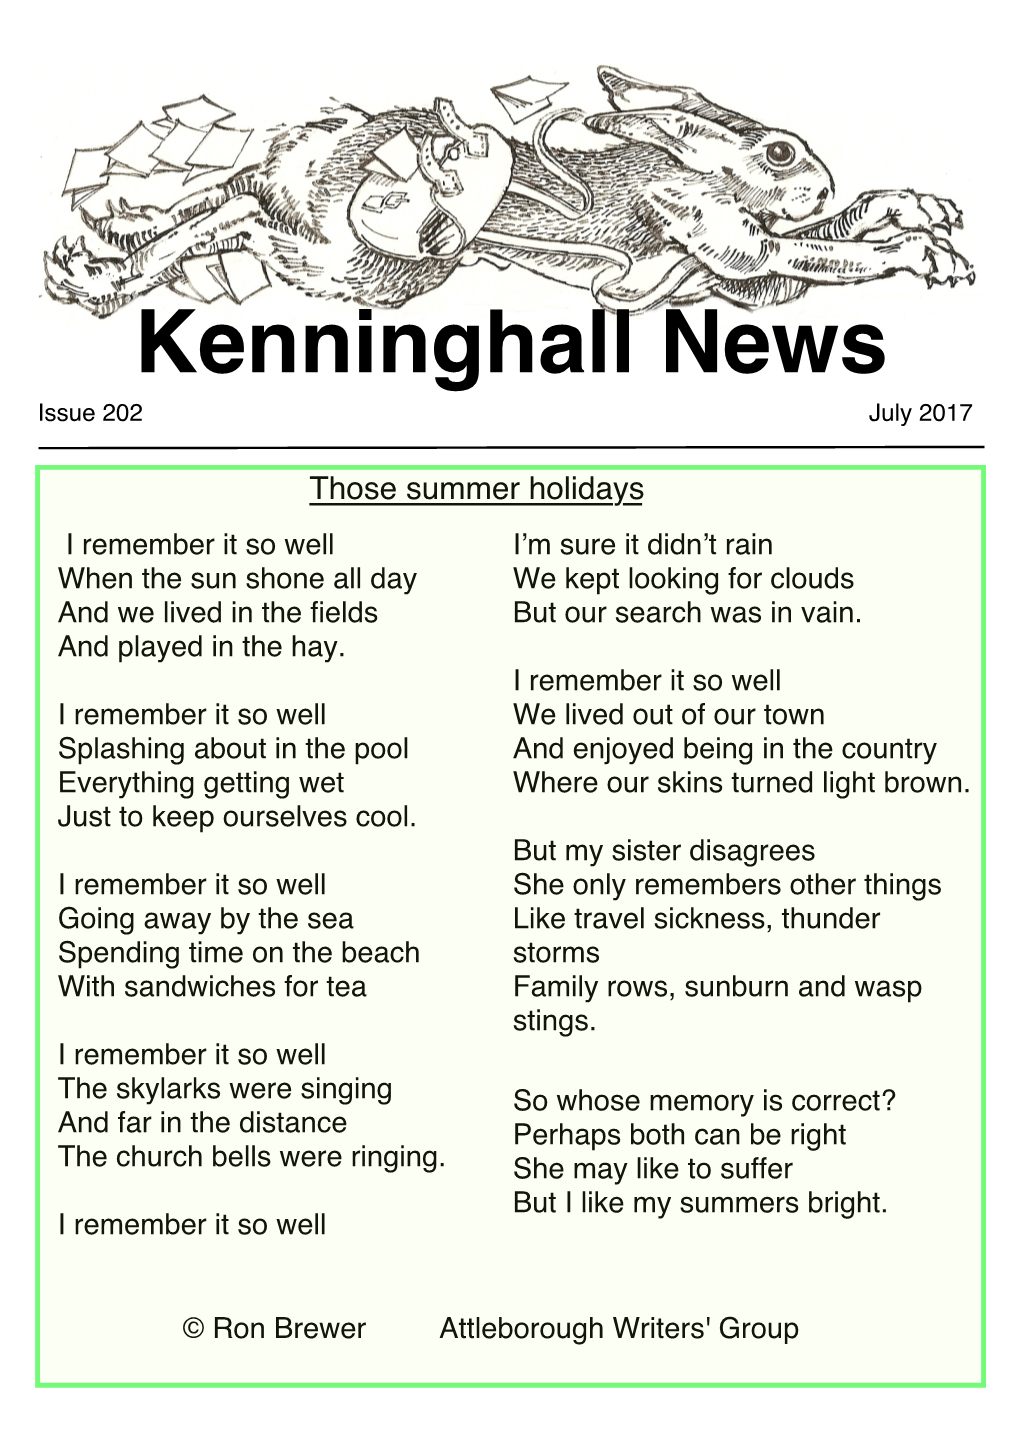 Kenninghall News July 2017